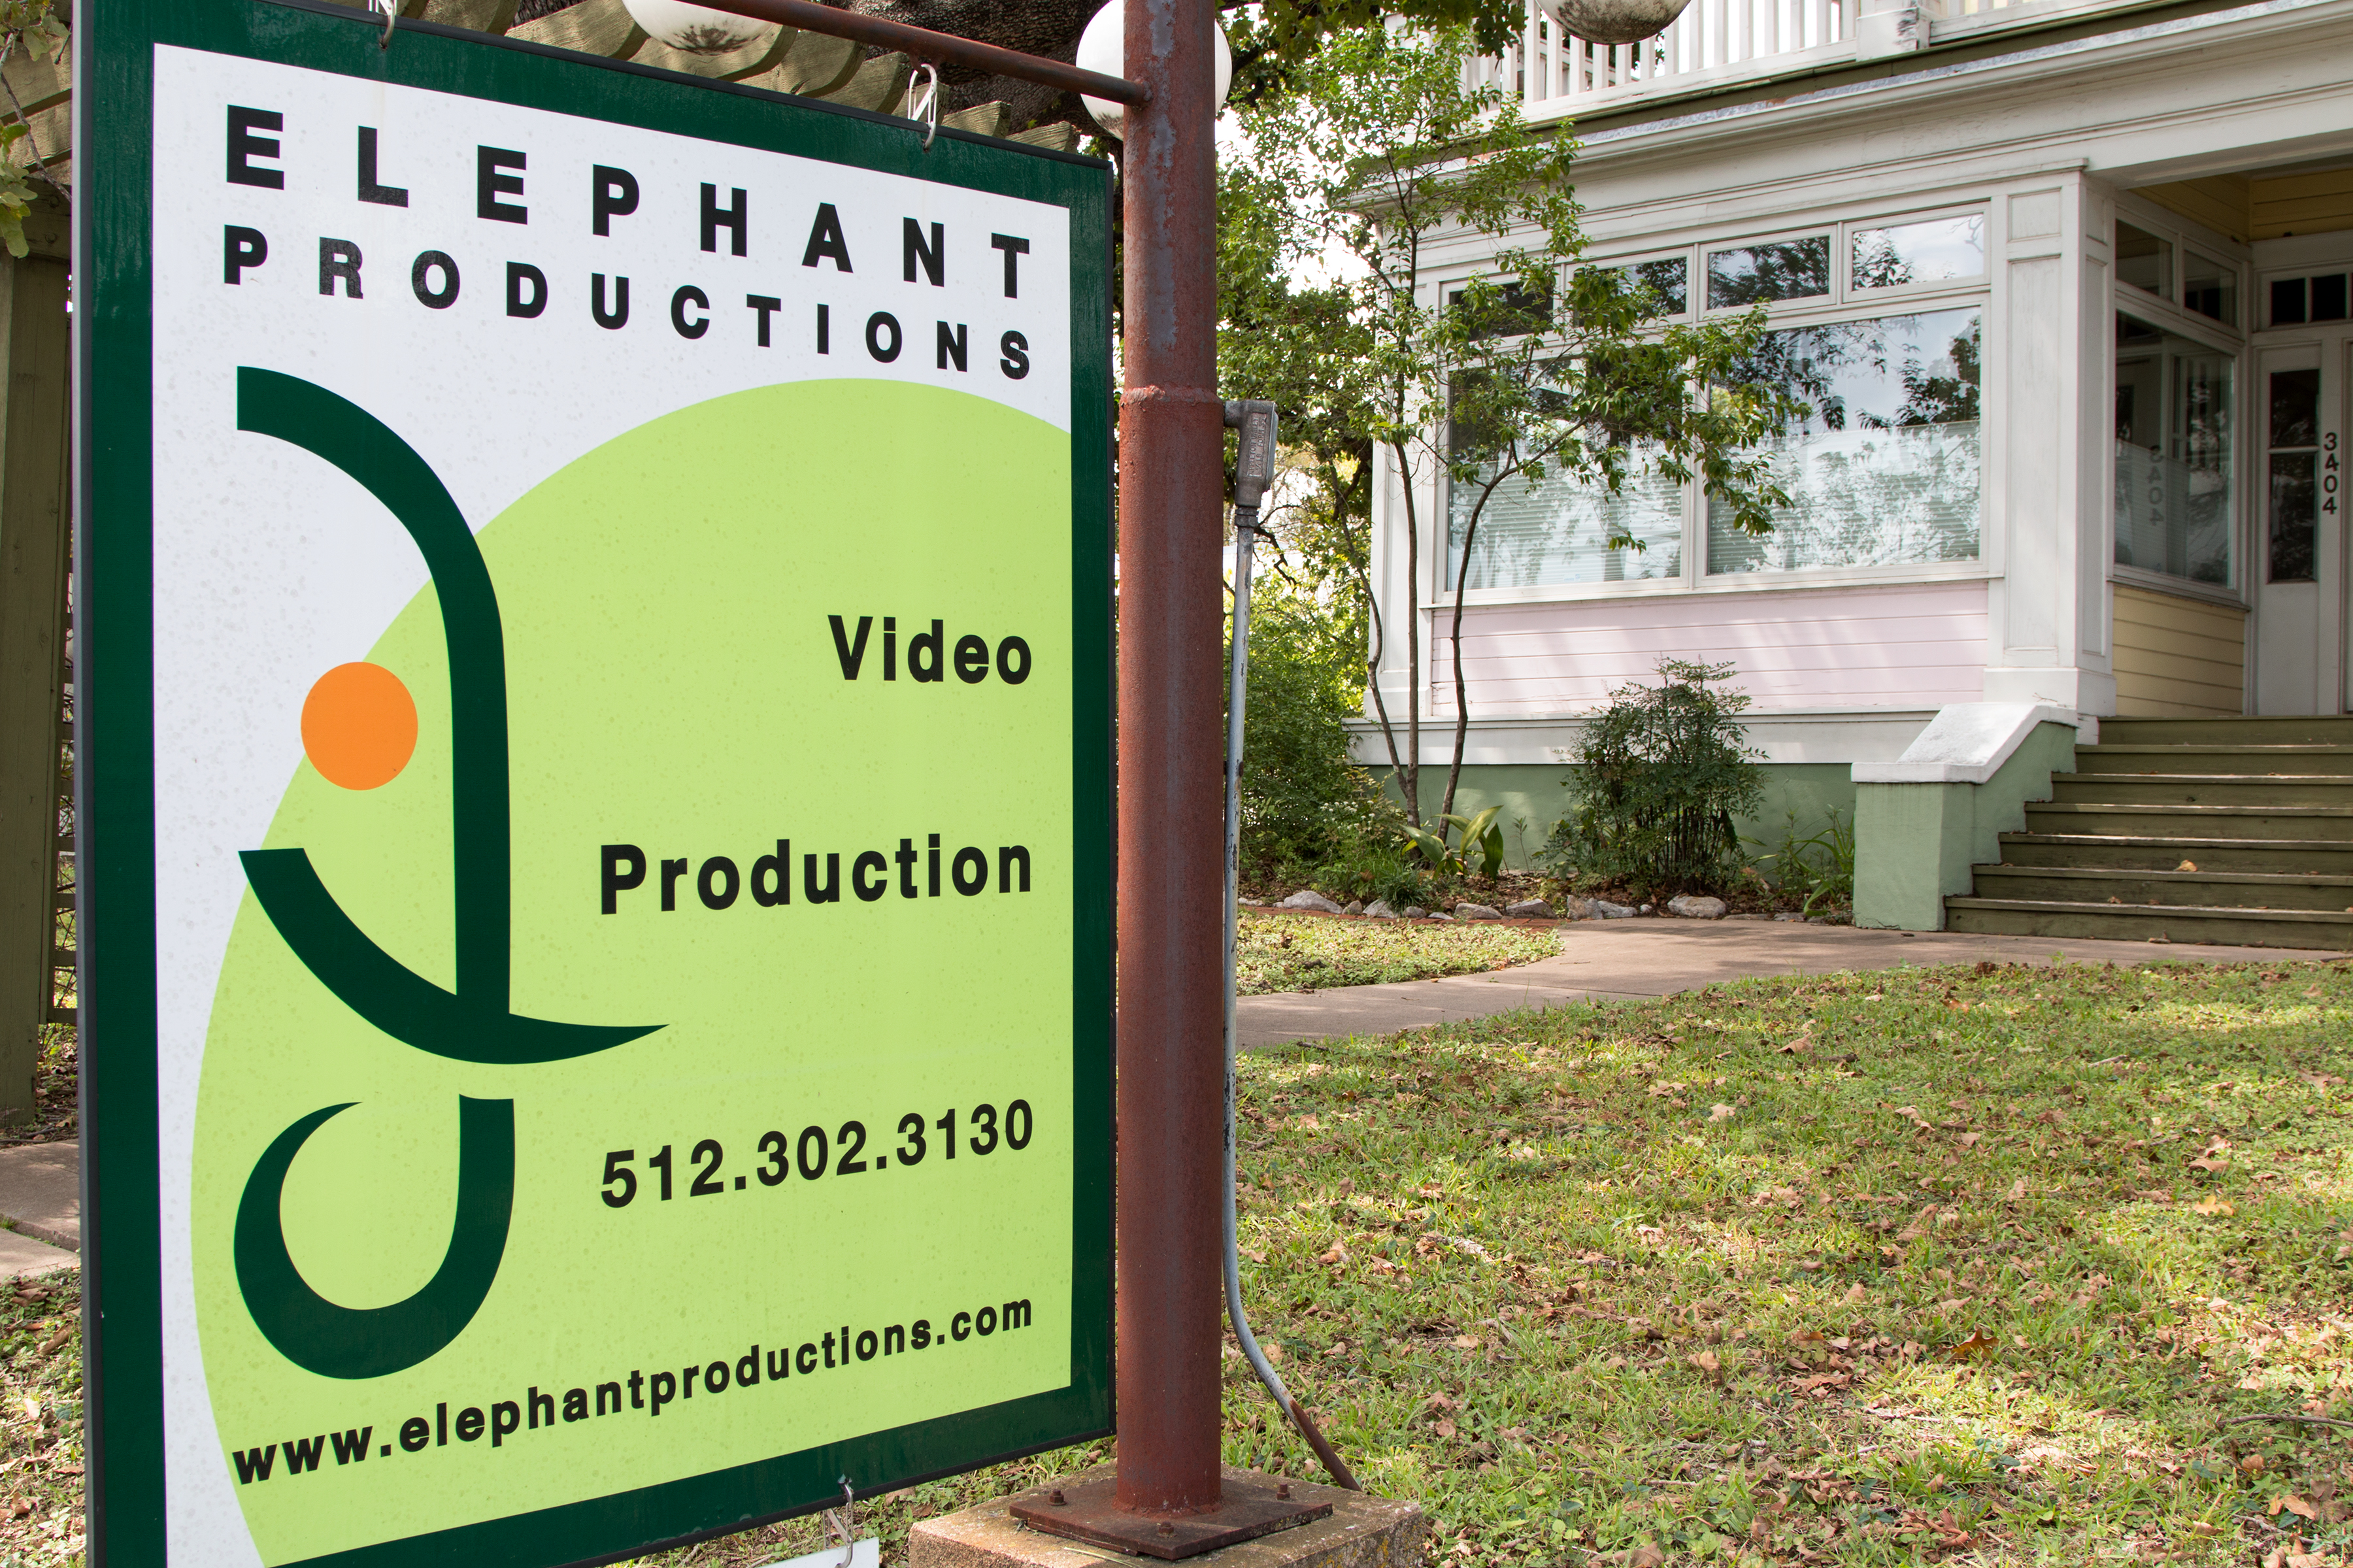 Elephant Productions